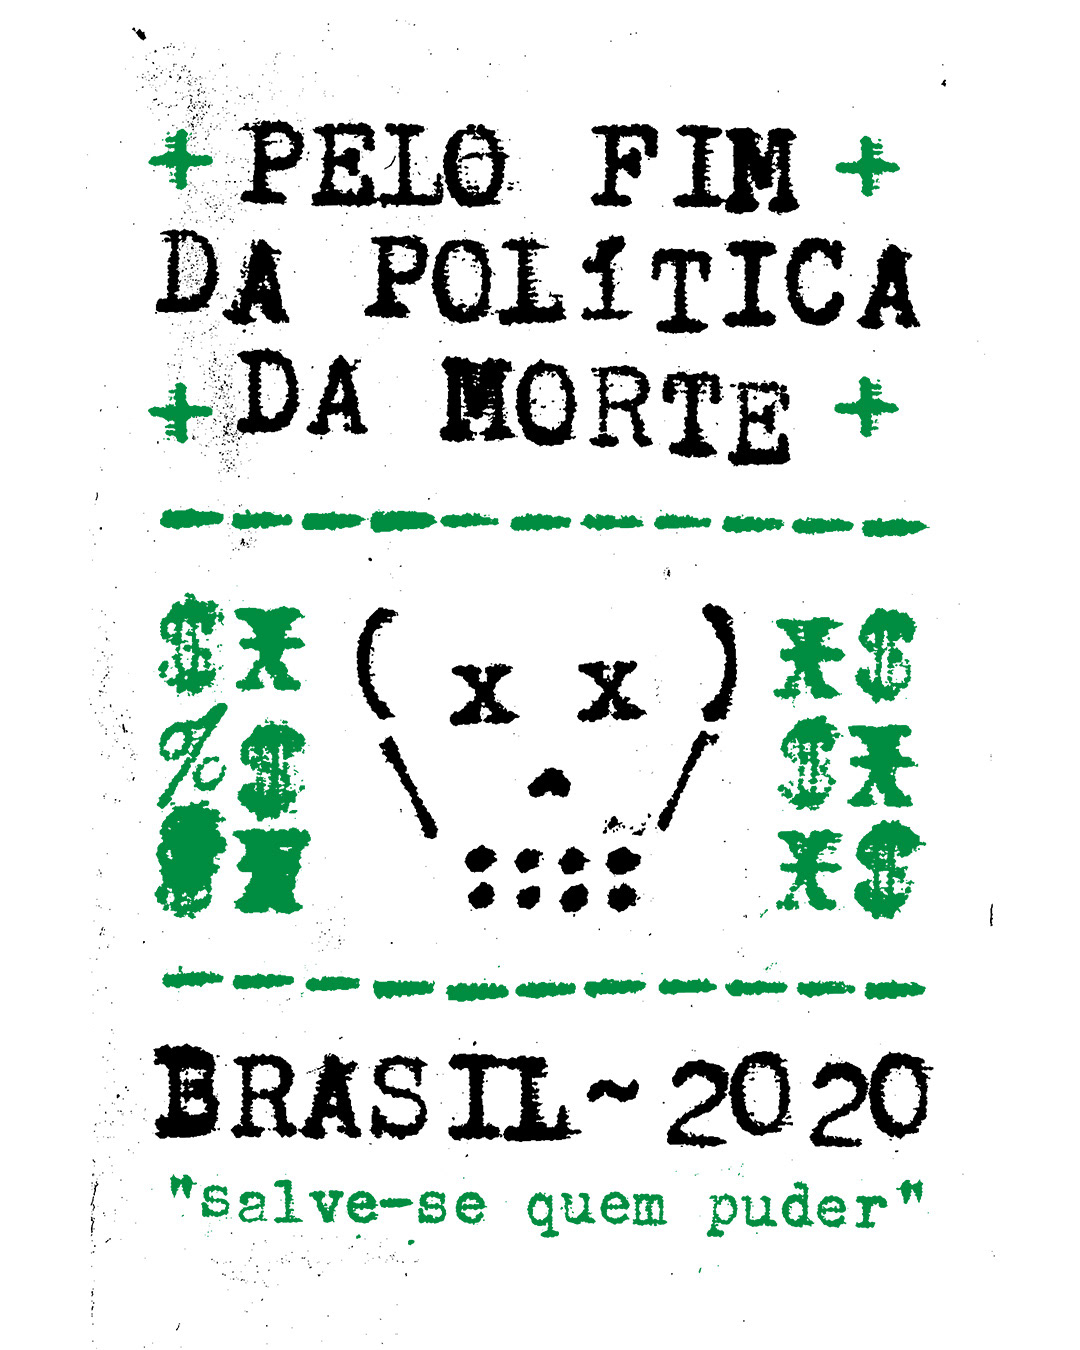 Brasil cartaz lambe morte motim Politica poster screenprint serigrafia silkscreen